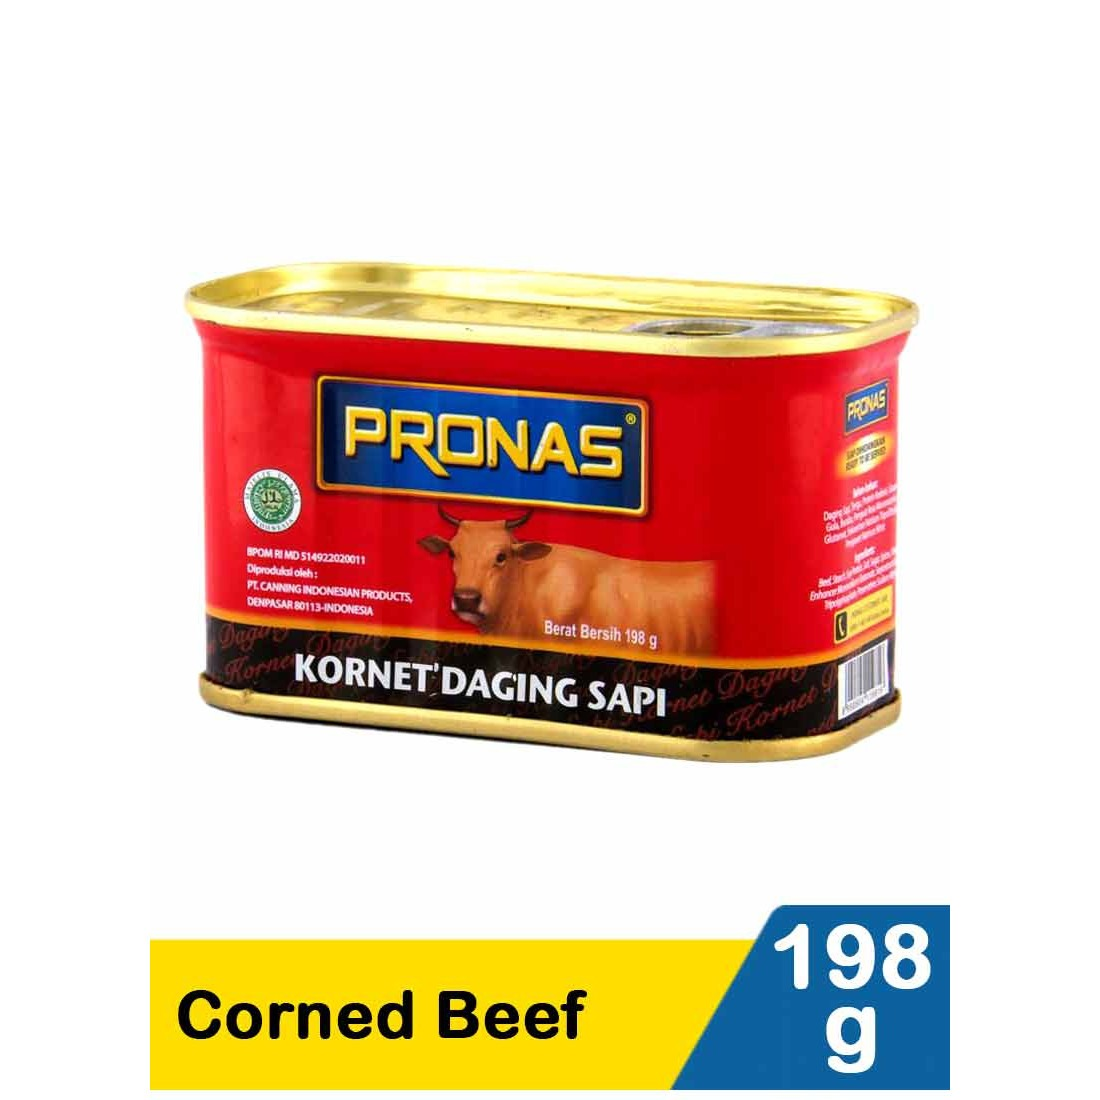 Pronas 198G Corned Beef